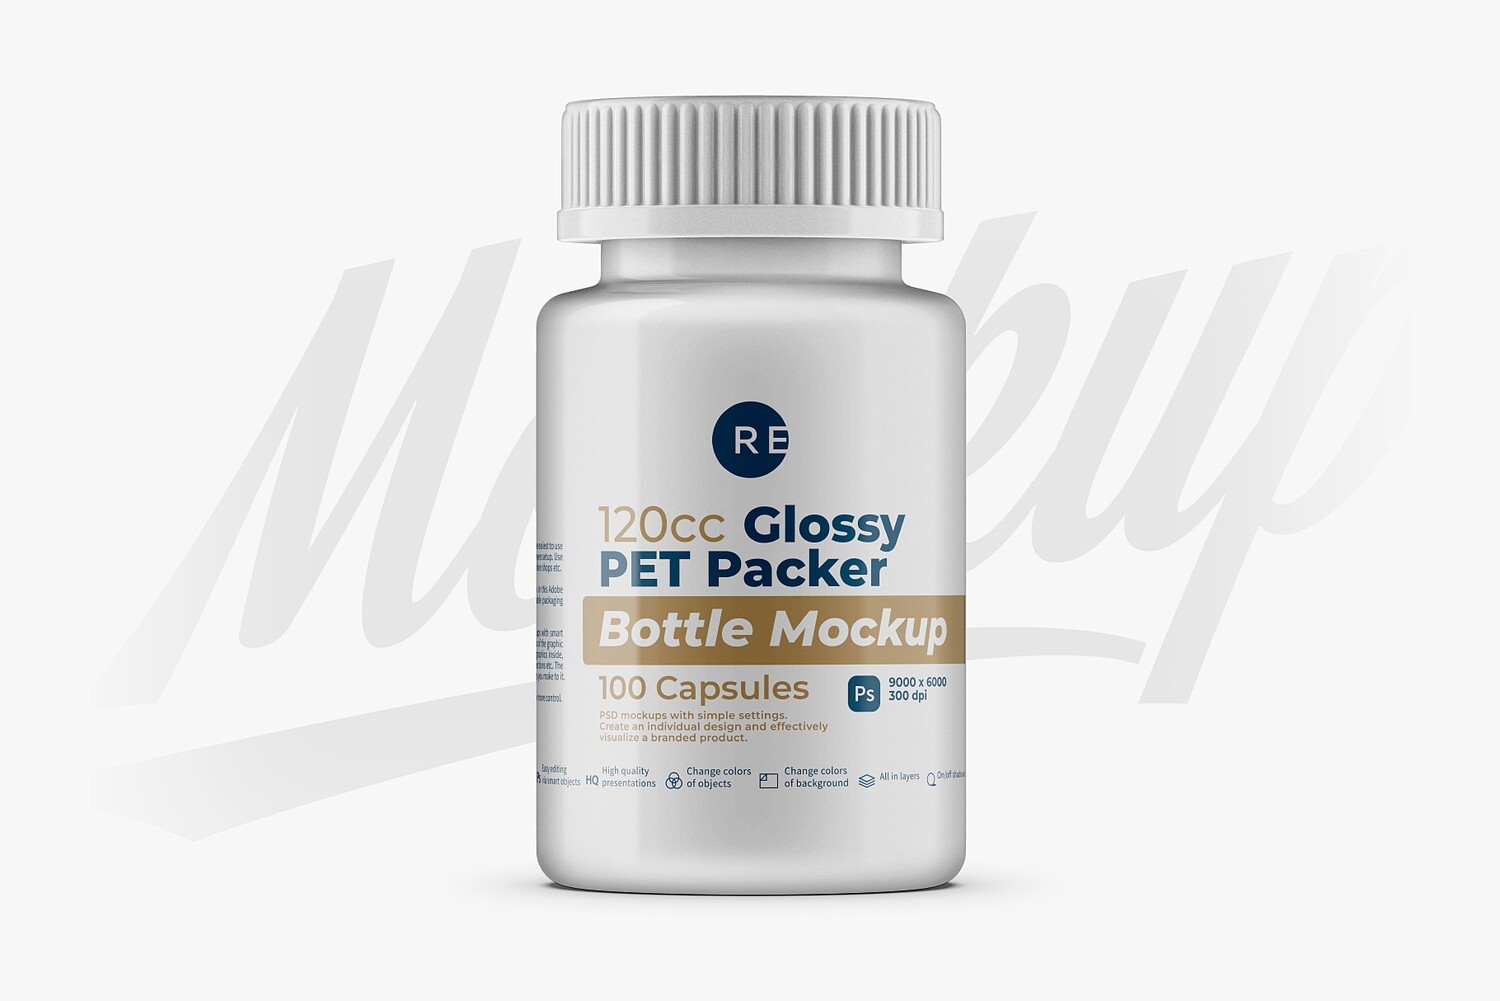 Glossy Pills Bottle Mockup 120cc